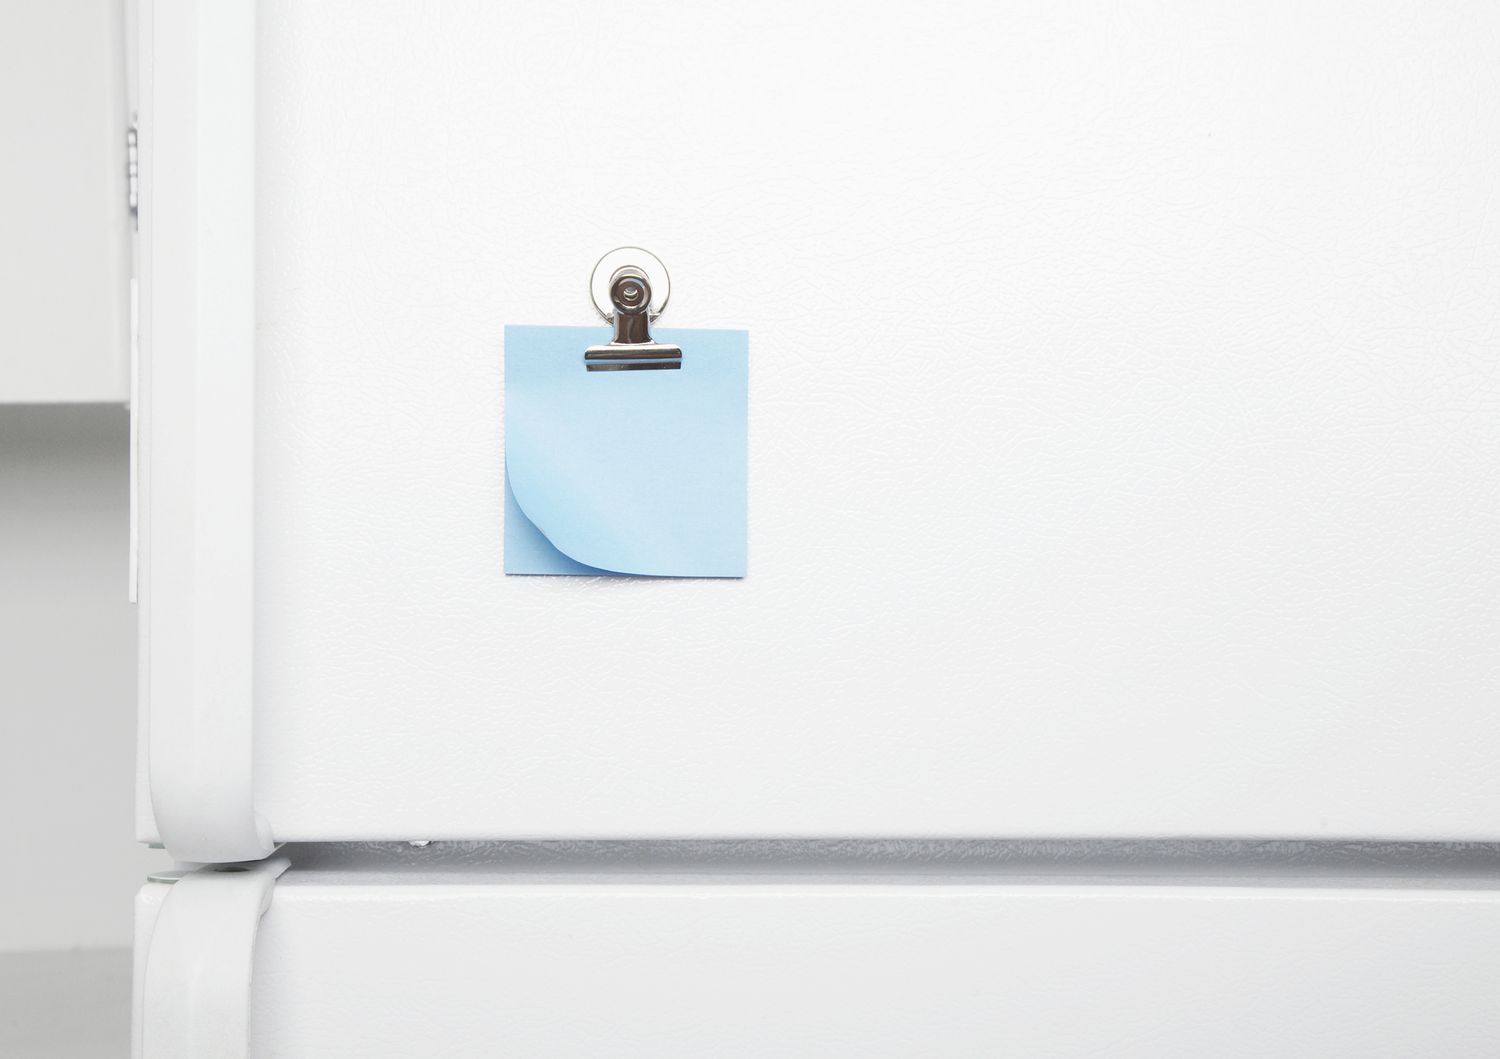 Exterior de la puerta de la nevera con una nota adhesiva azul.